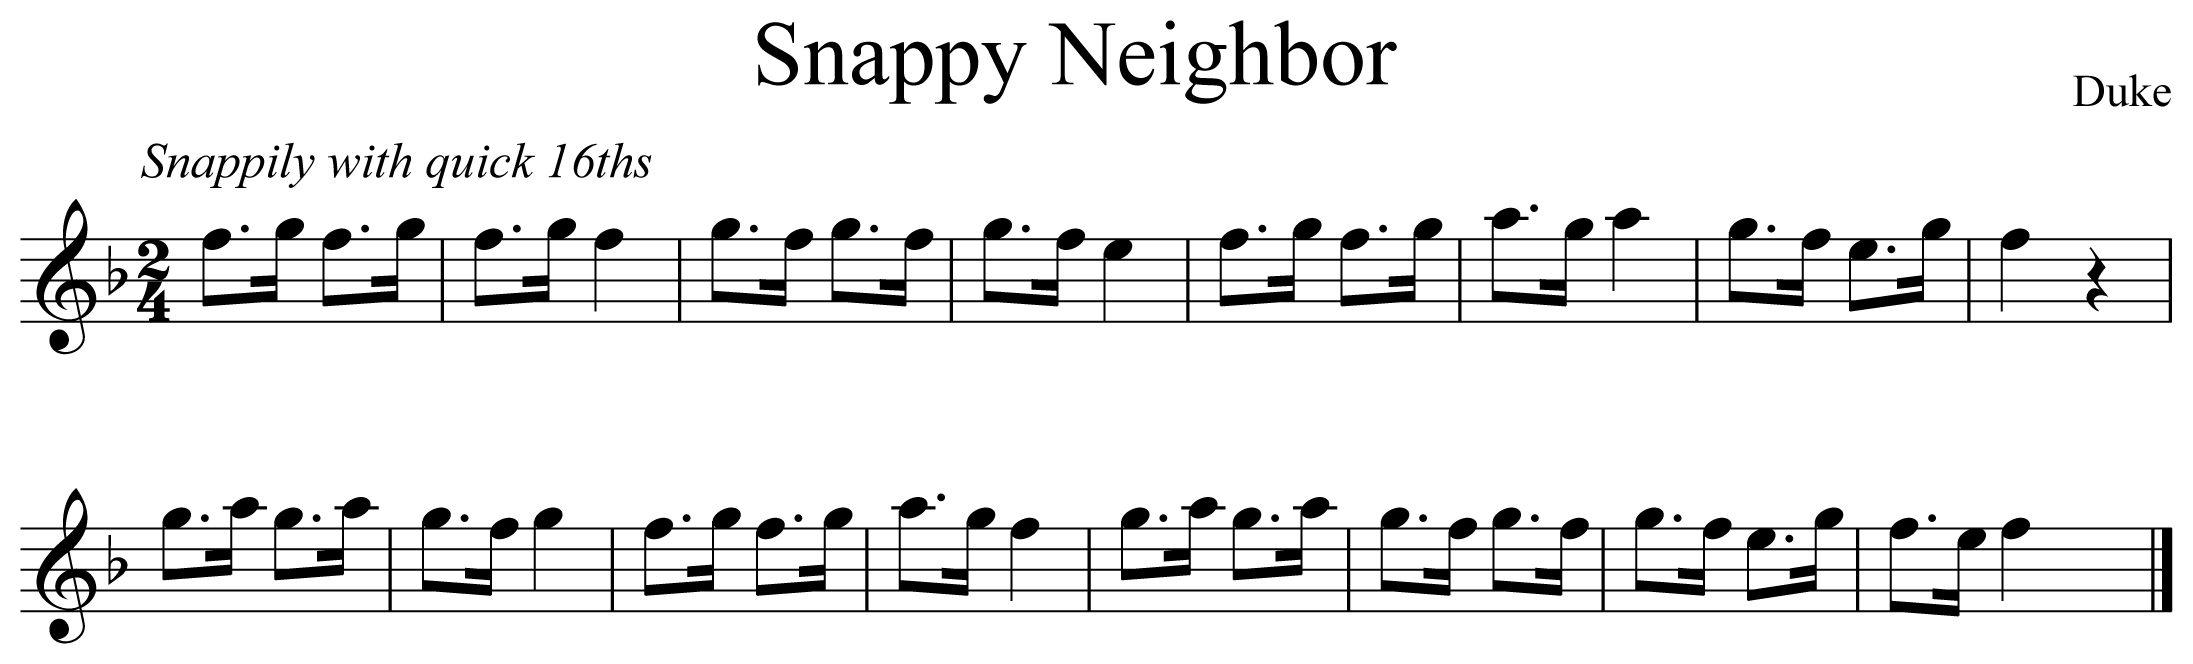 Snappy Neighbor Music Notation 